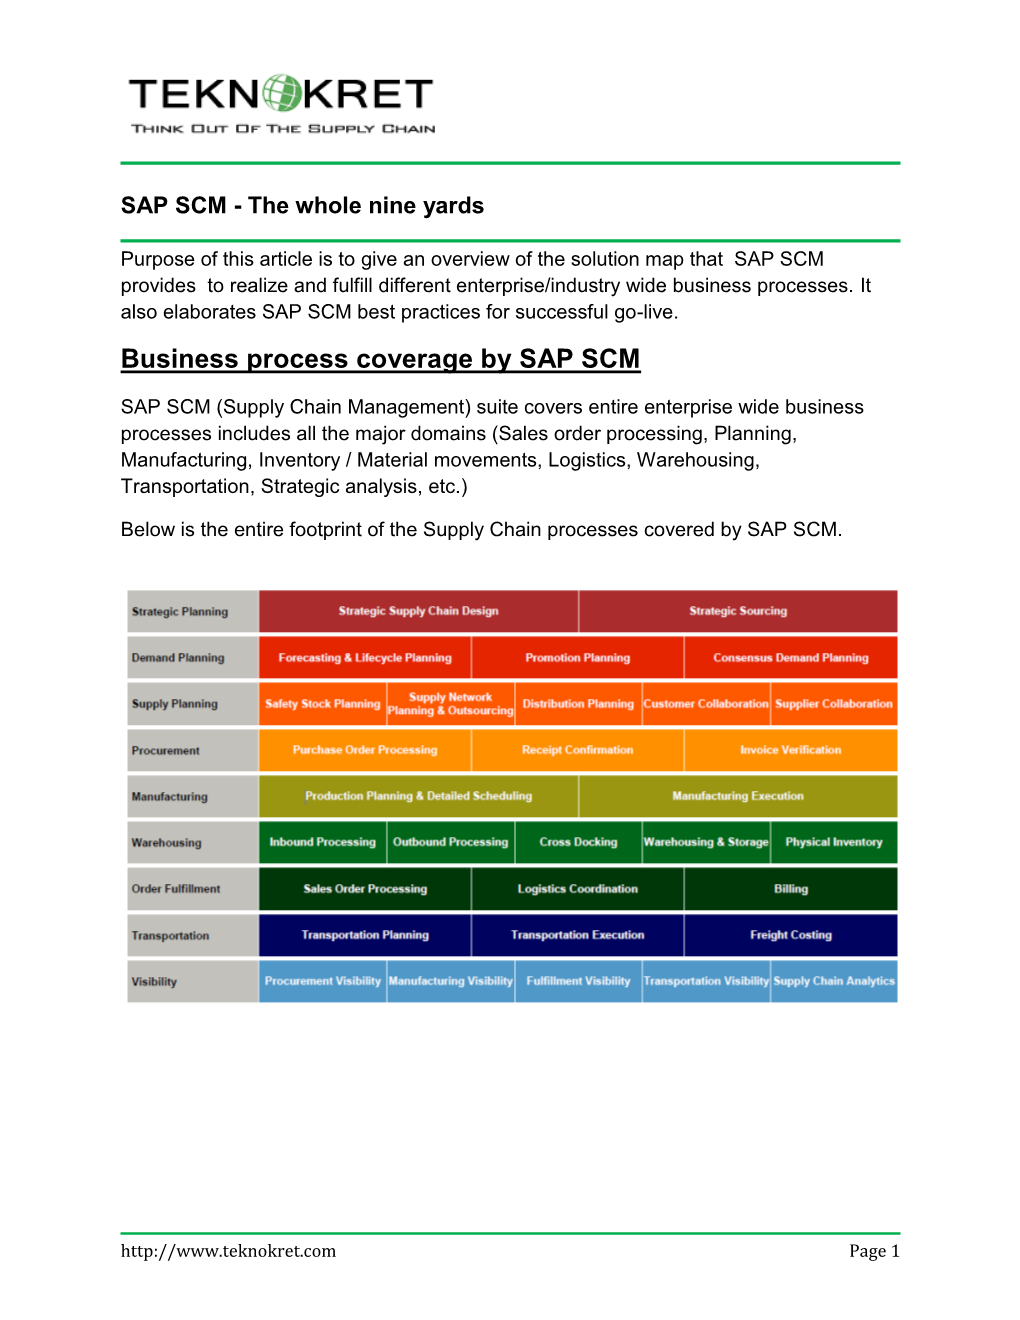 Business Process Coverage by SAP SCM